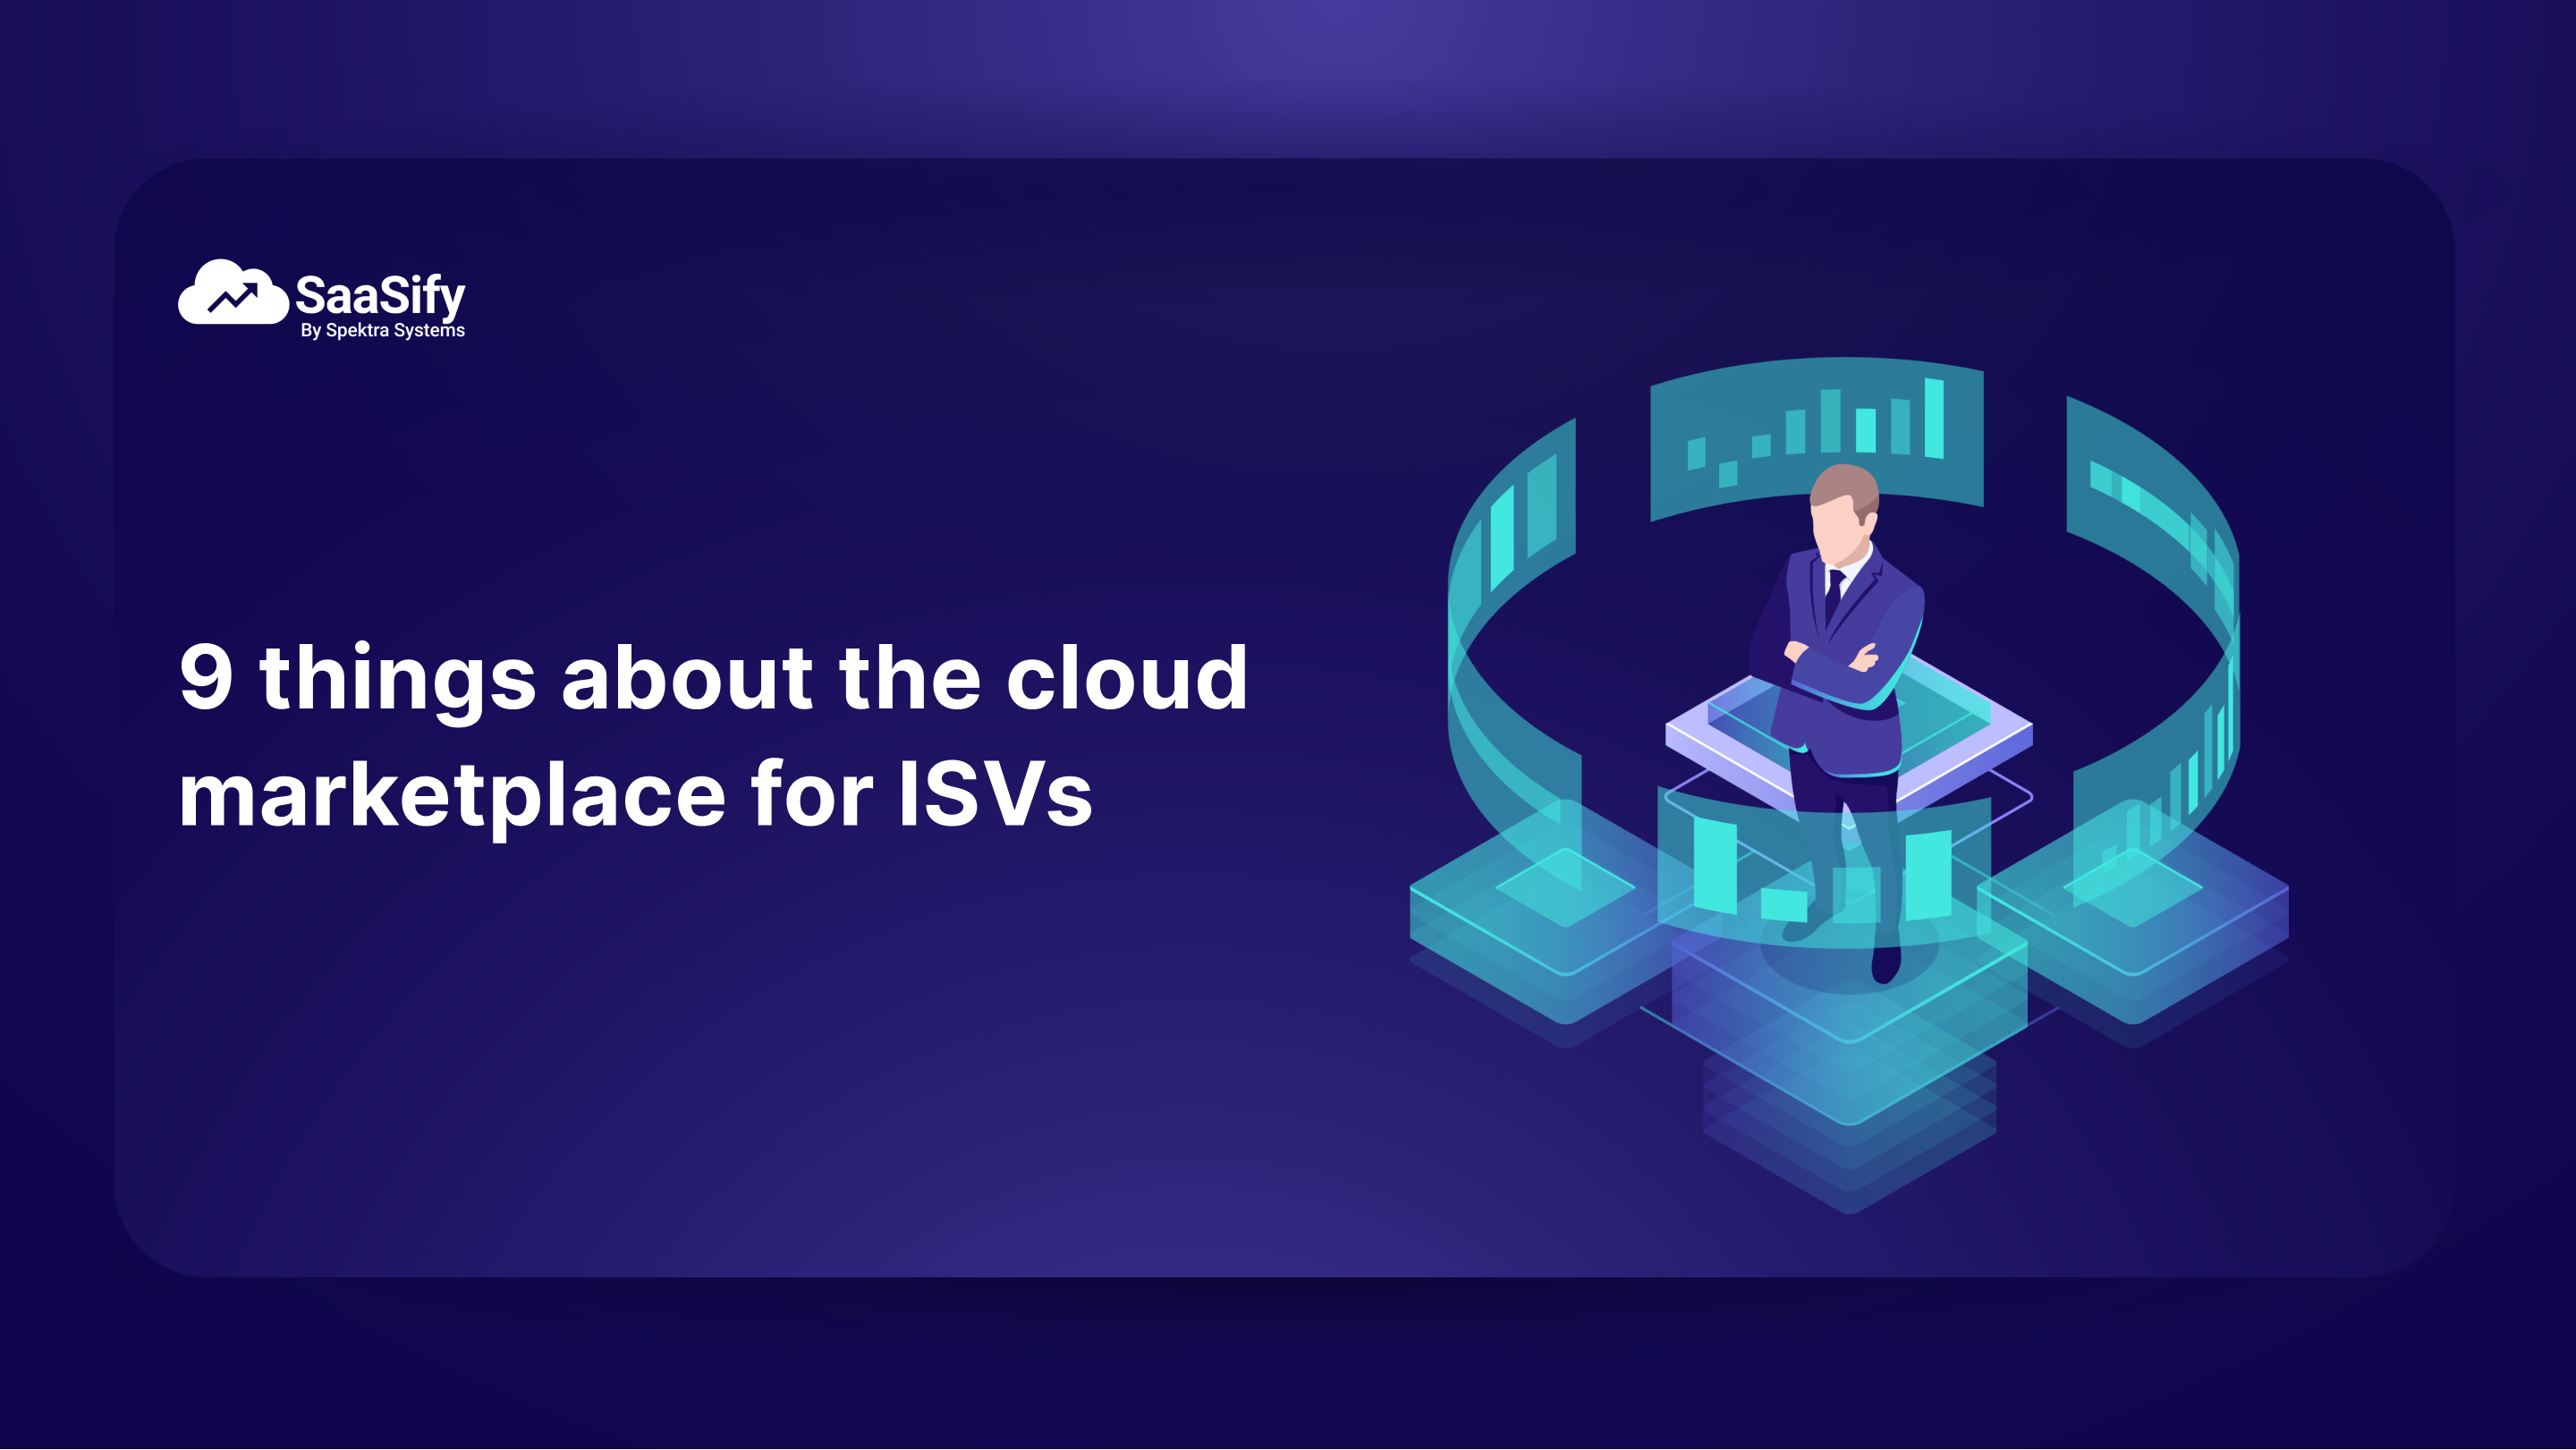 Cloud Marketplaces as an ISV